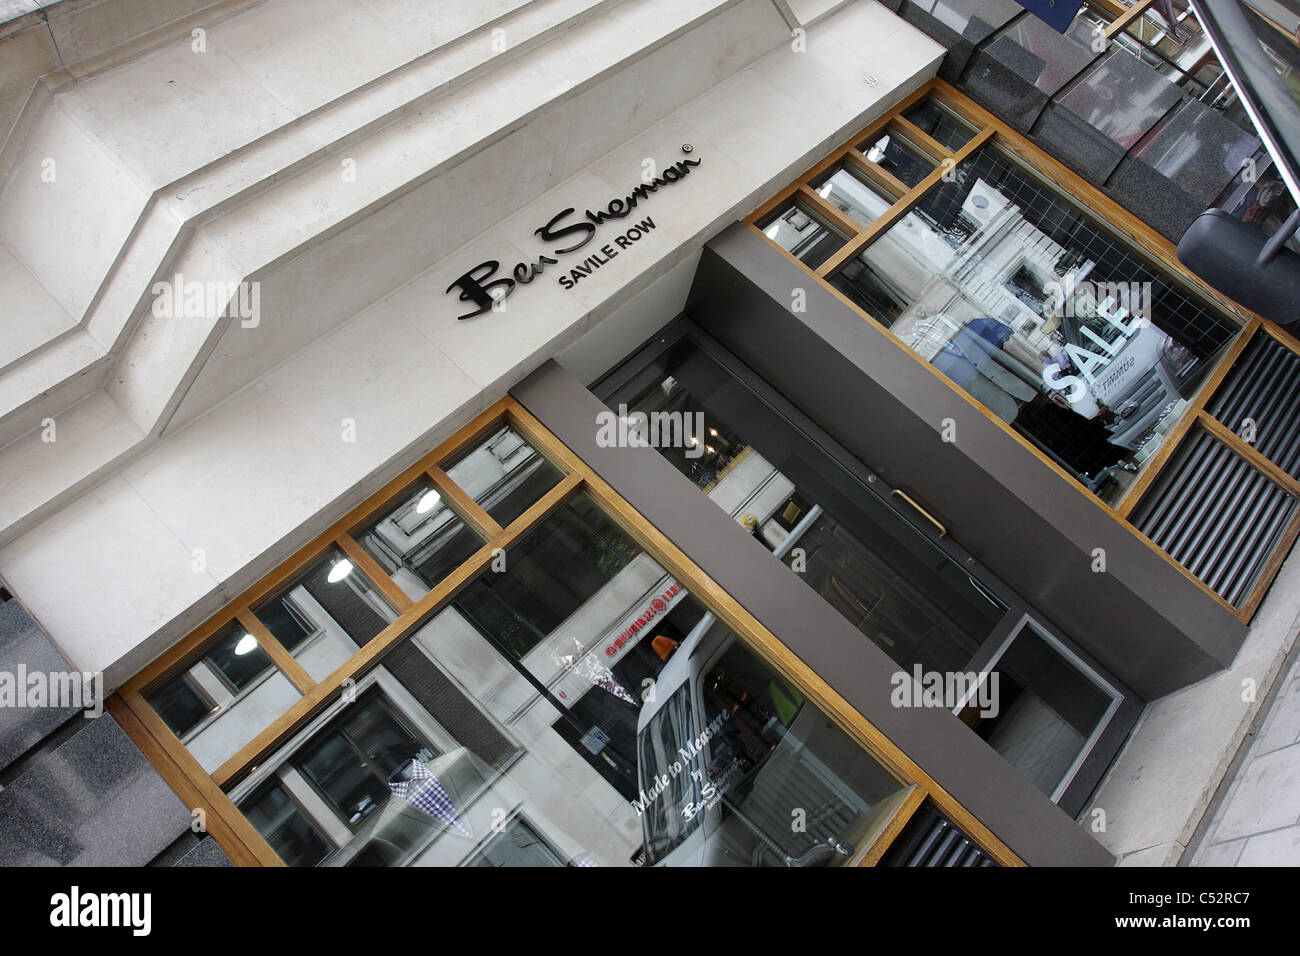 Ben Sherman outlet in Savile Row, London Stock Photo - Alamy